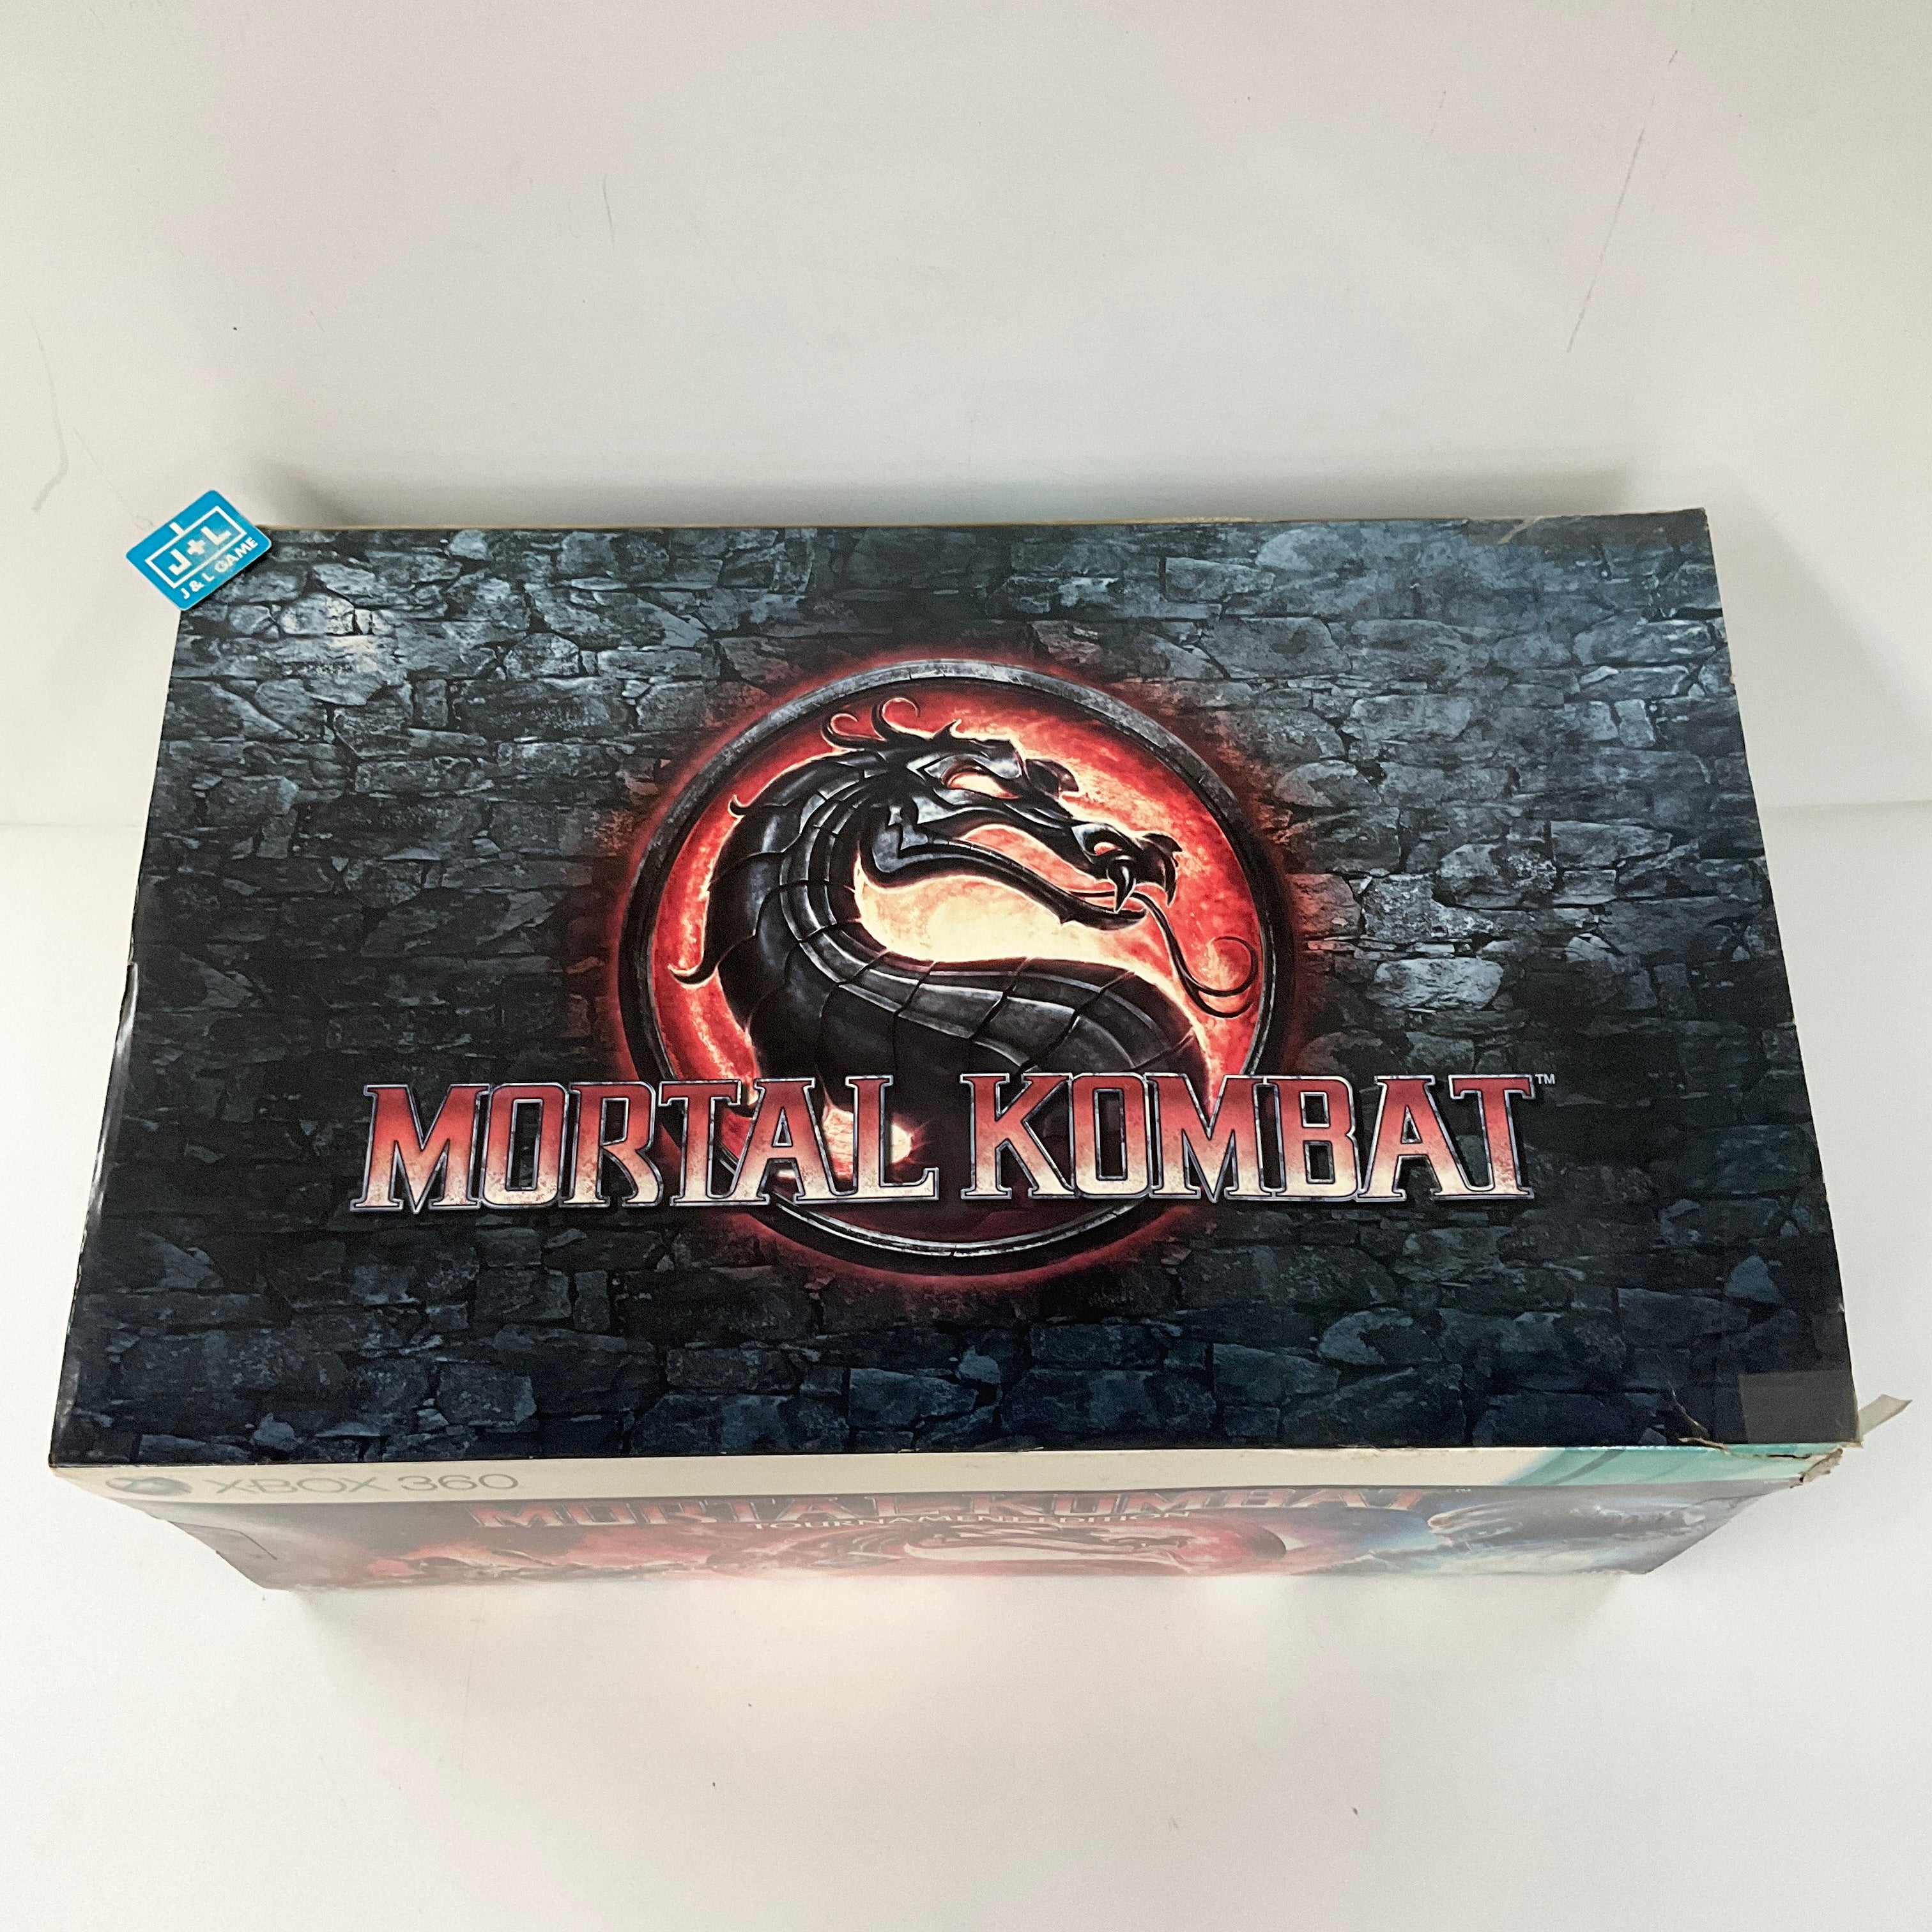 Mortal Kombat (Tournament Edition) - Xbox 360 Accessories Warner Bros. Interactive Entertainment   